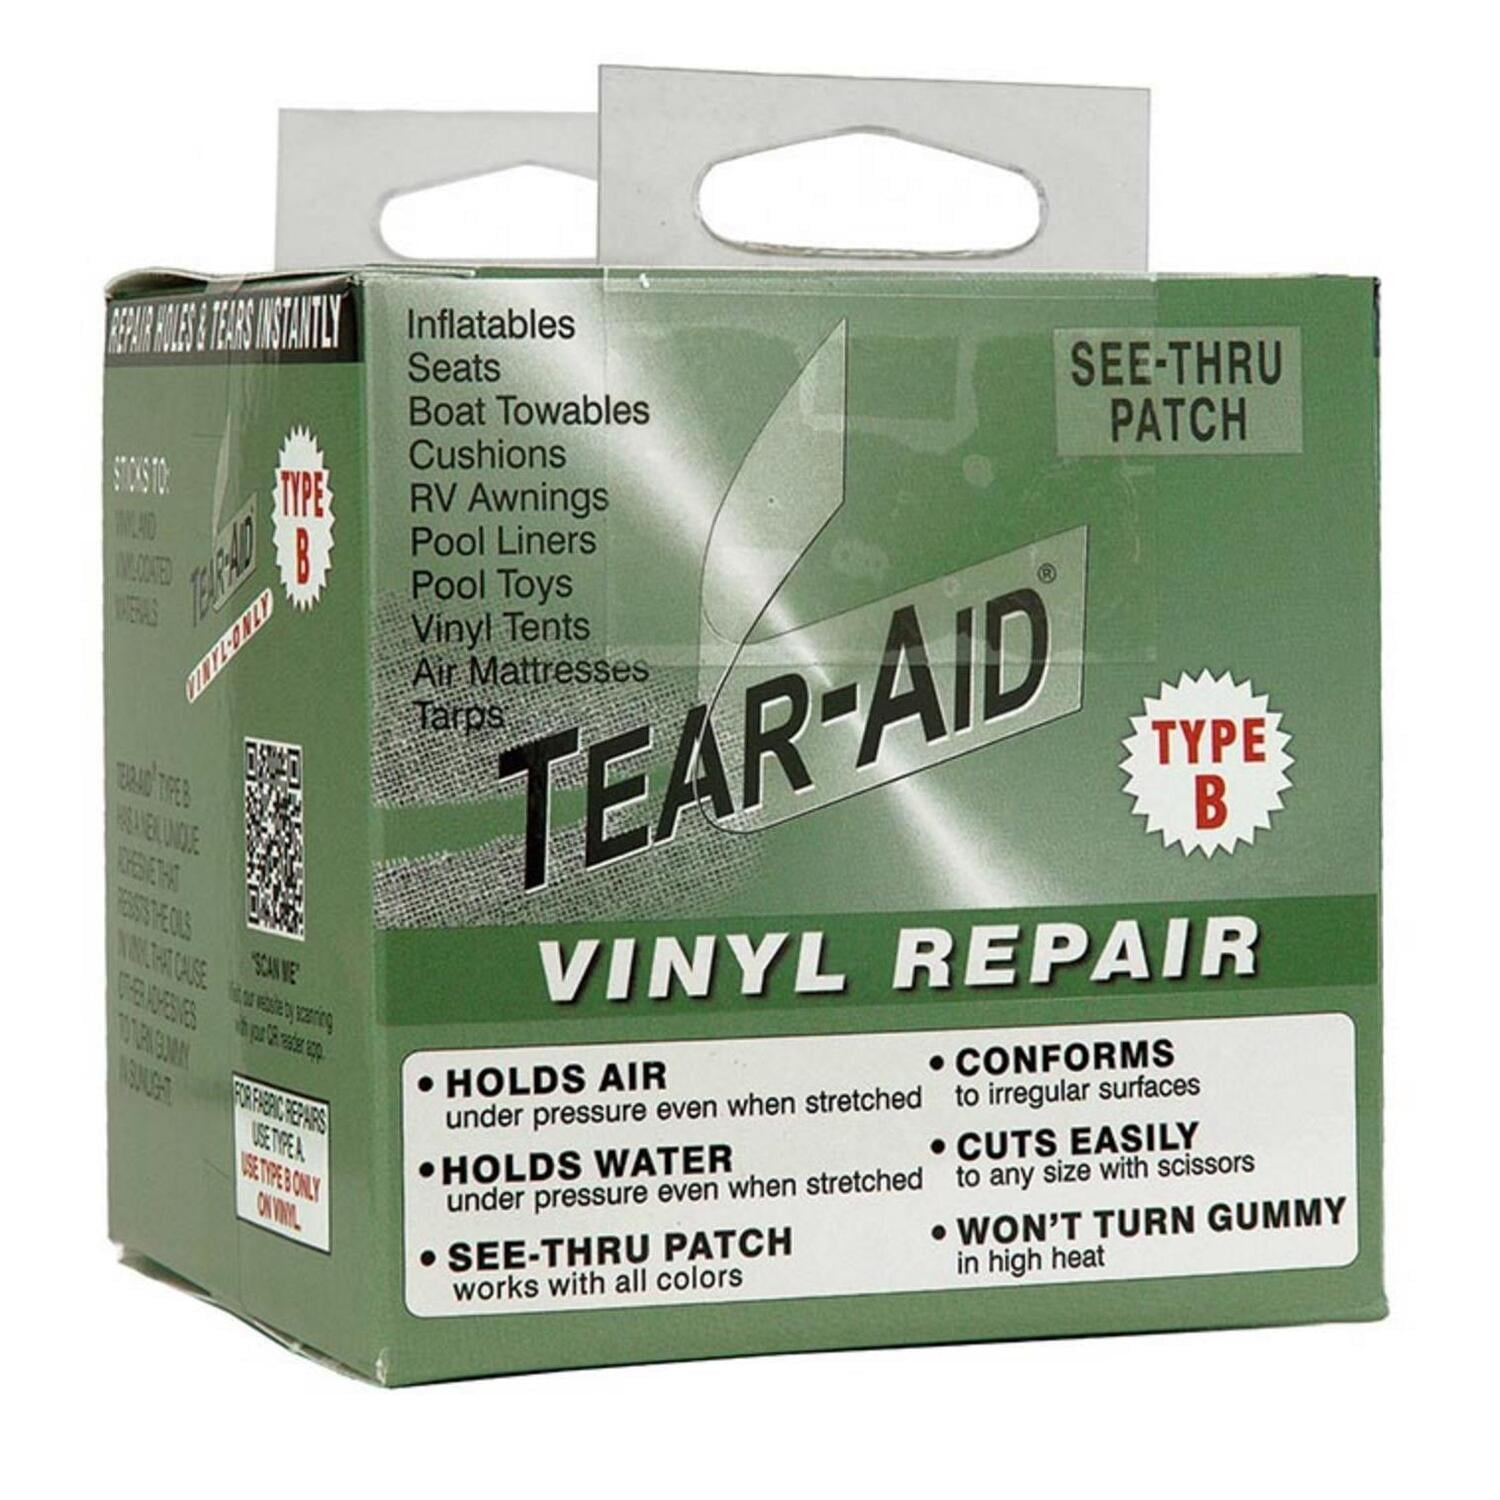 Tear Aid Vinyl Repair Kit